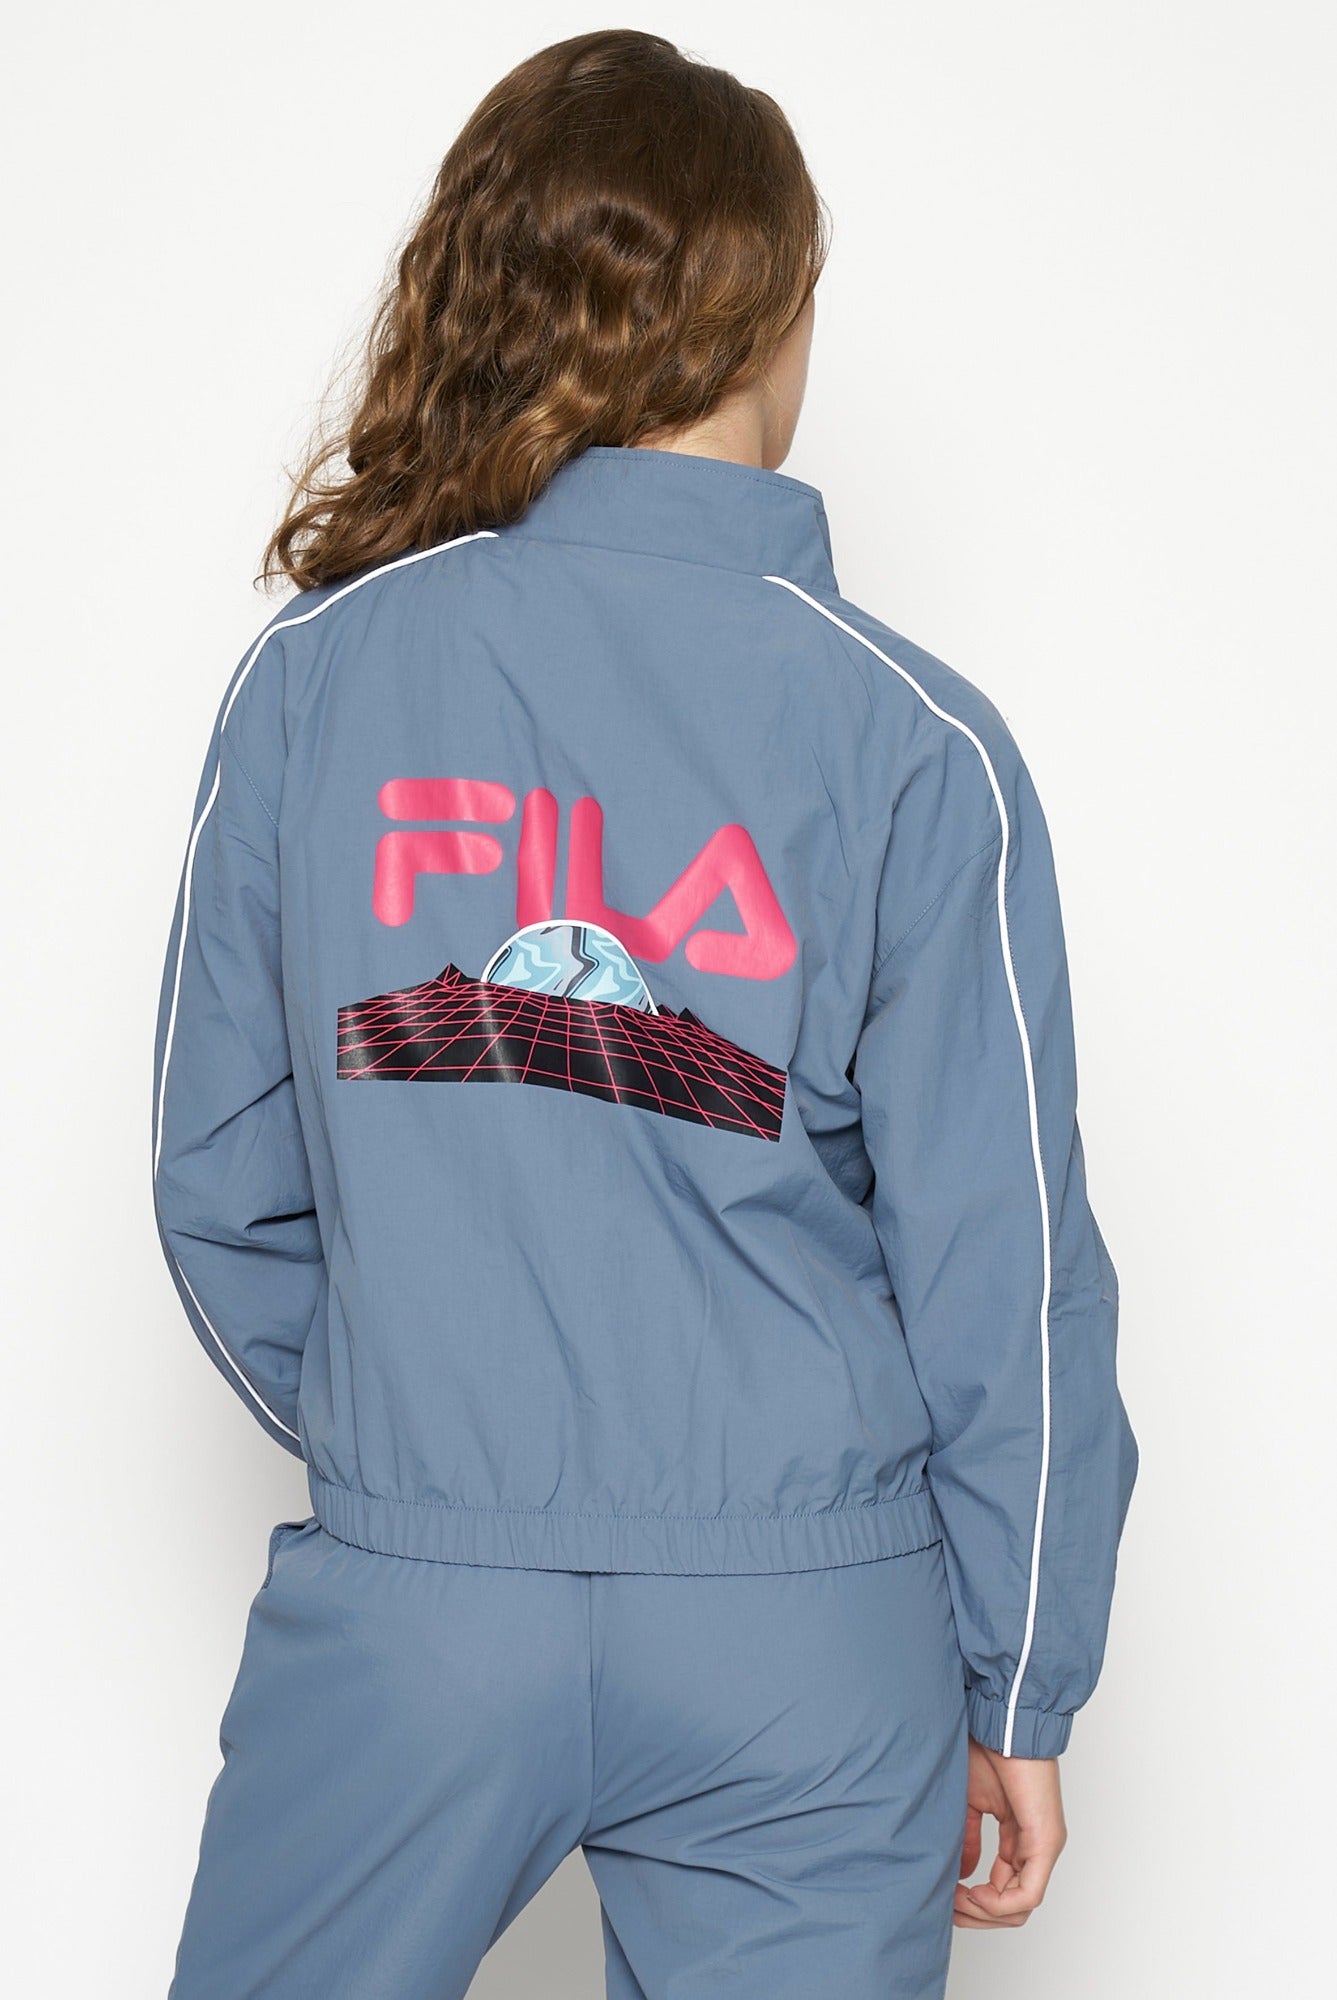 FILA Women's Nova Jacket